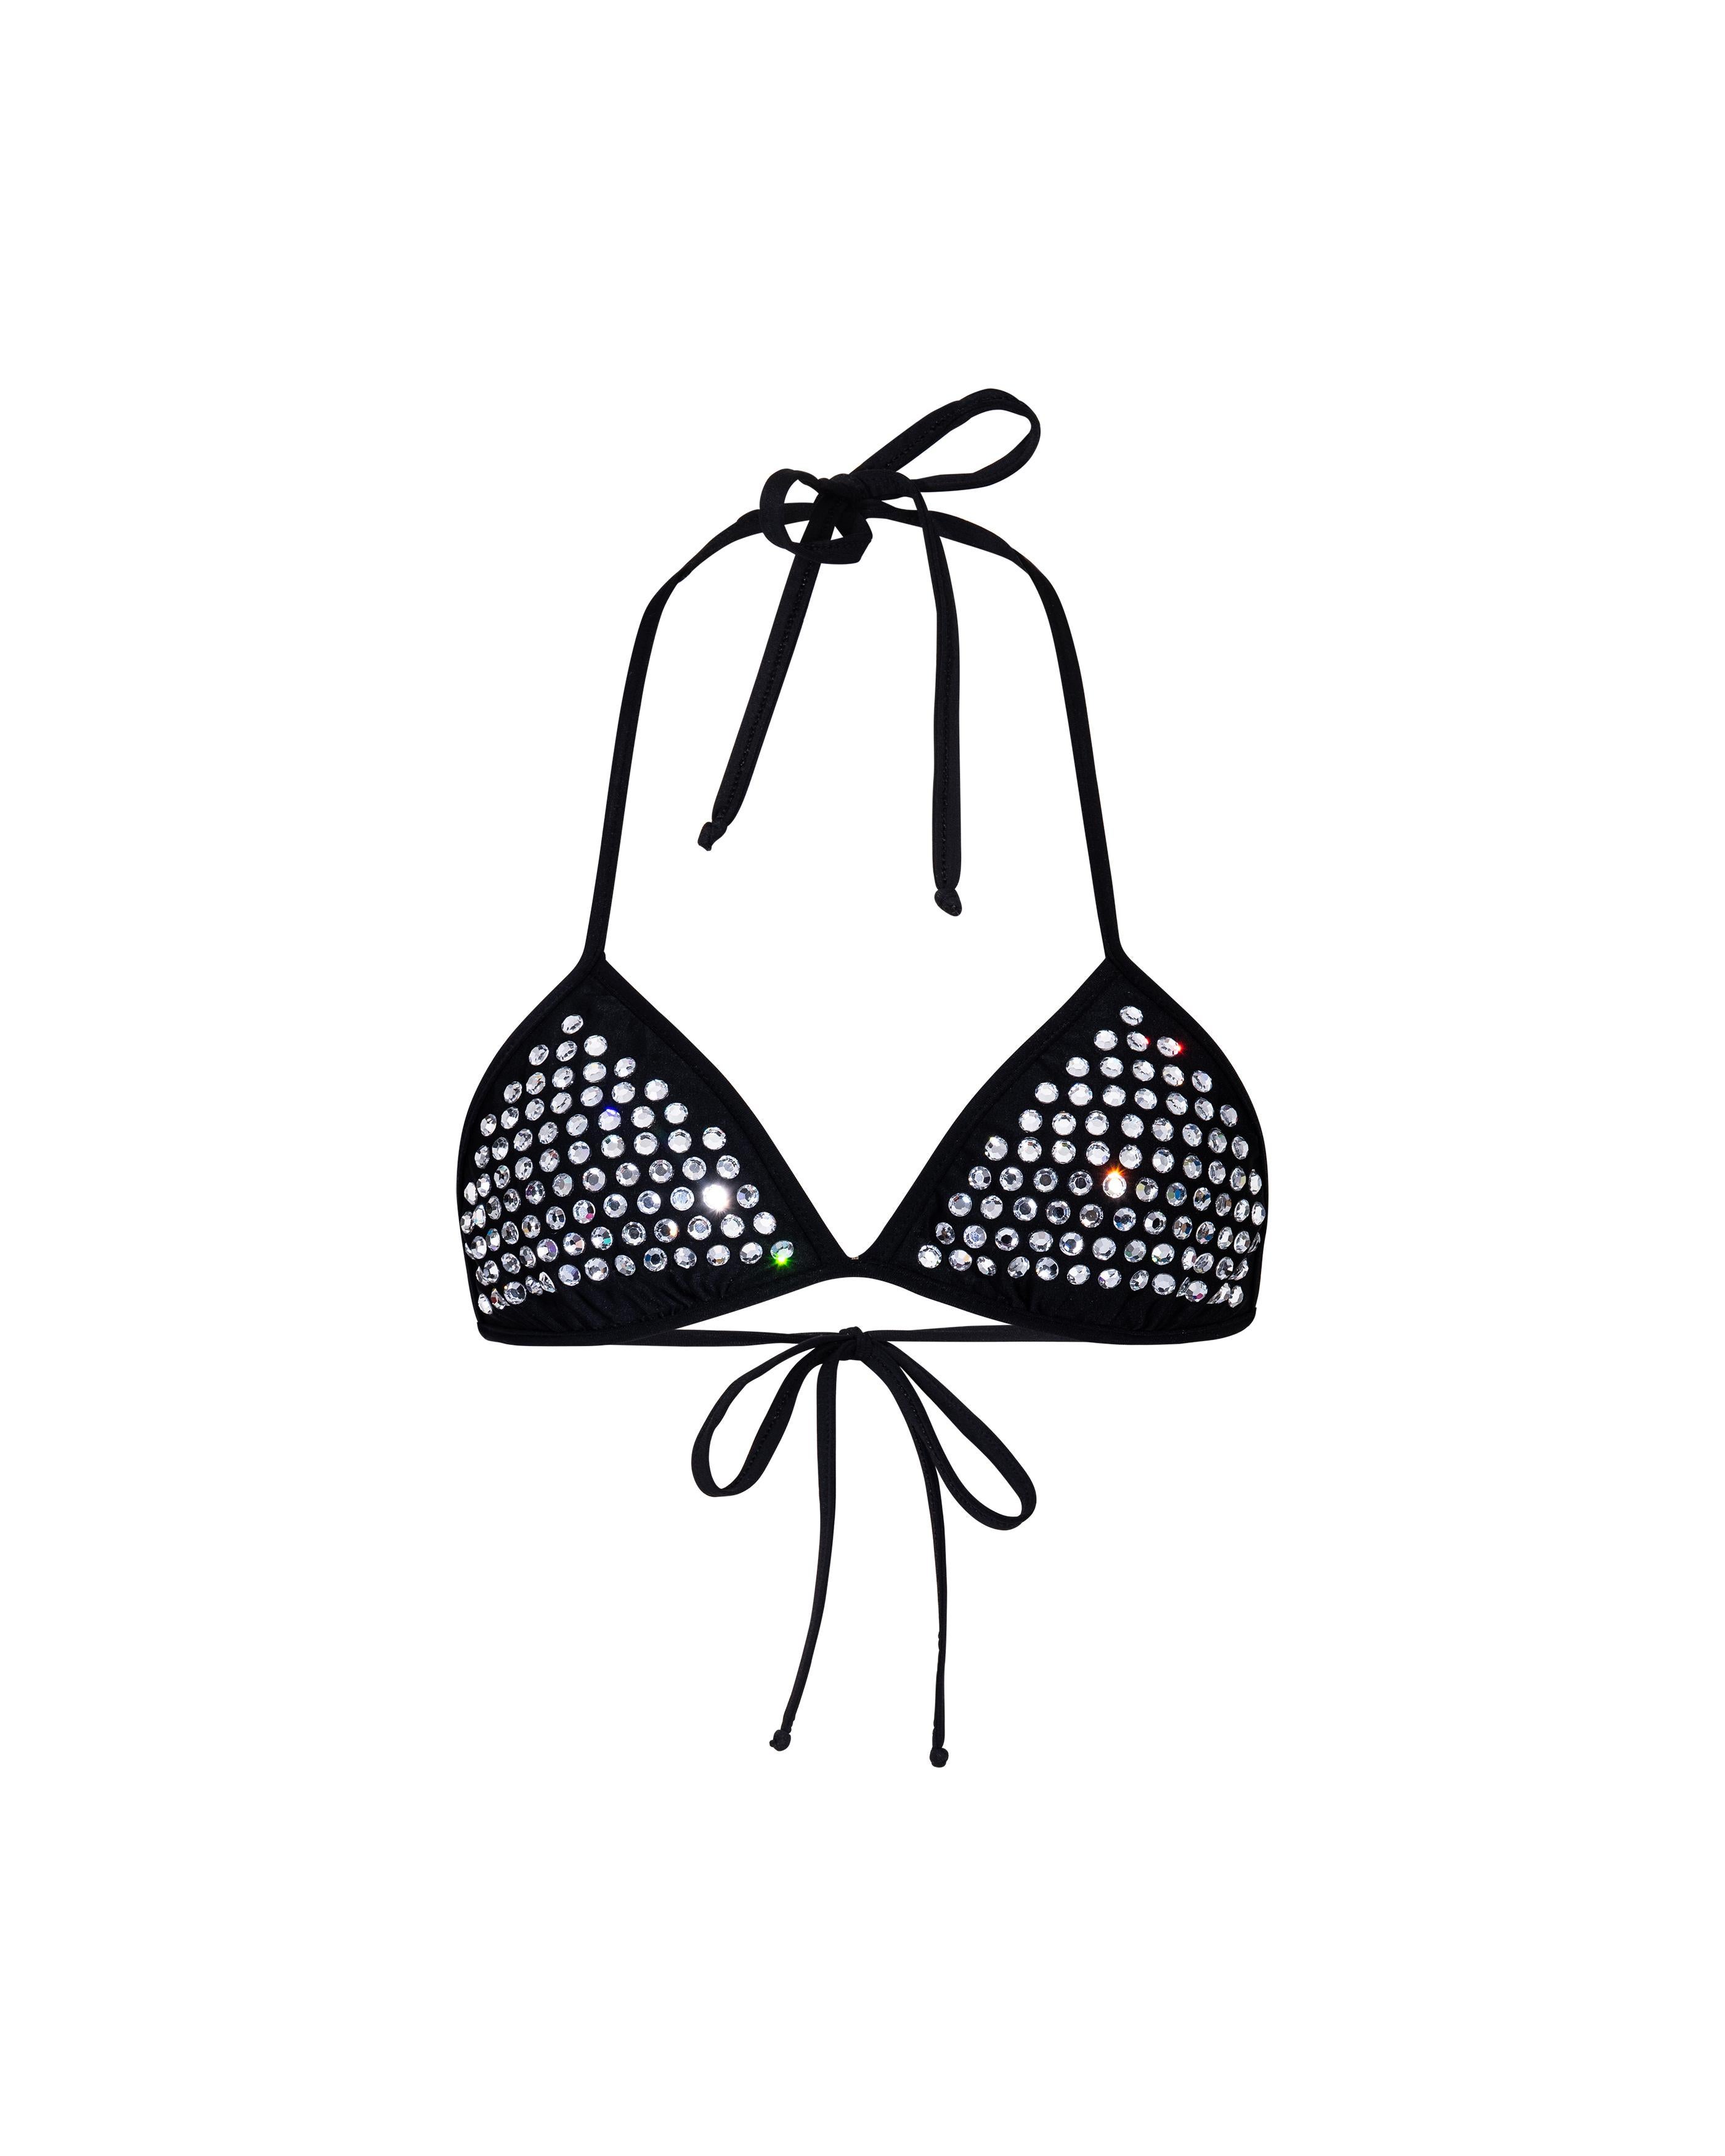 S/S 1995 Chanel by Karl Lagerfeld Black Crystal String Bikini 7